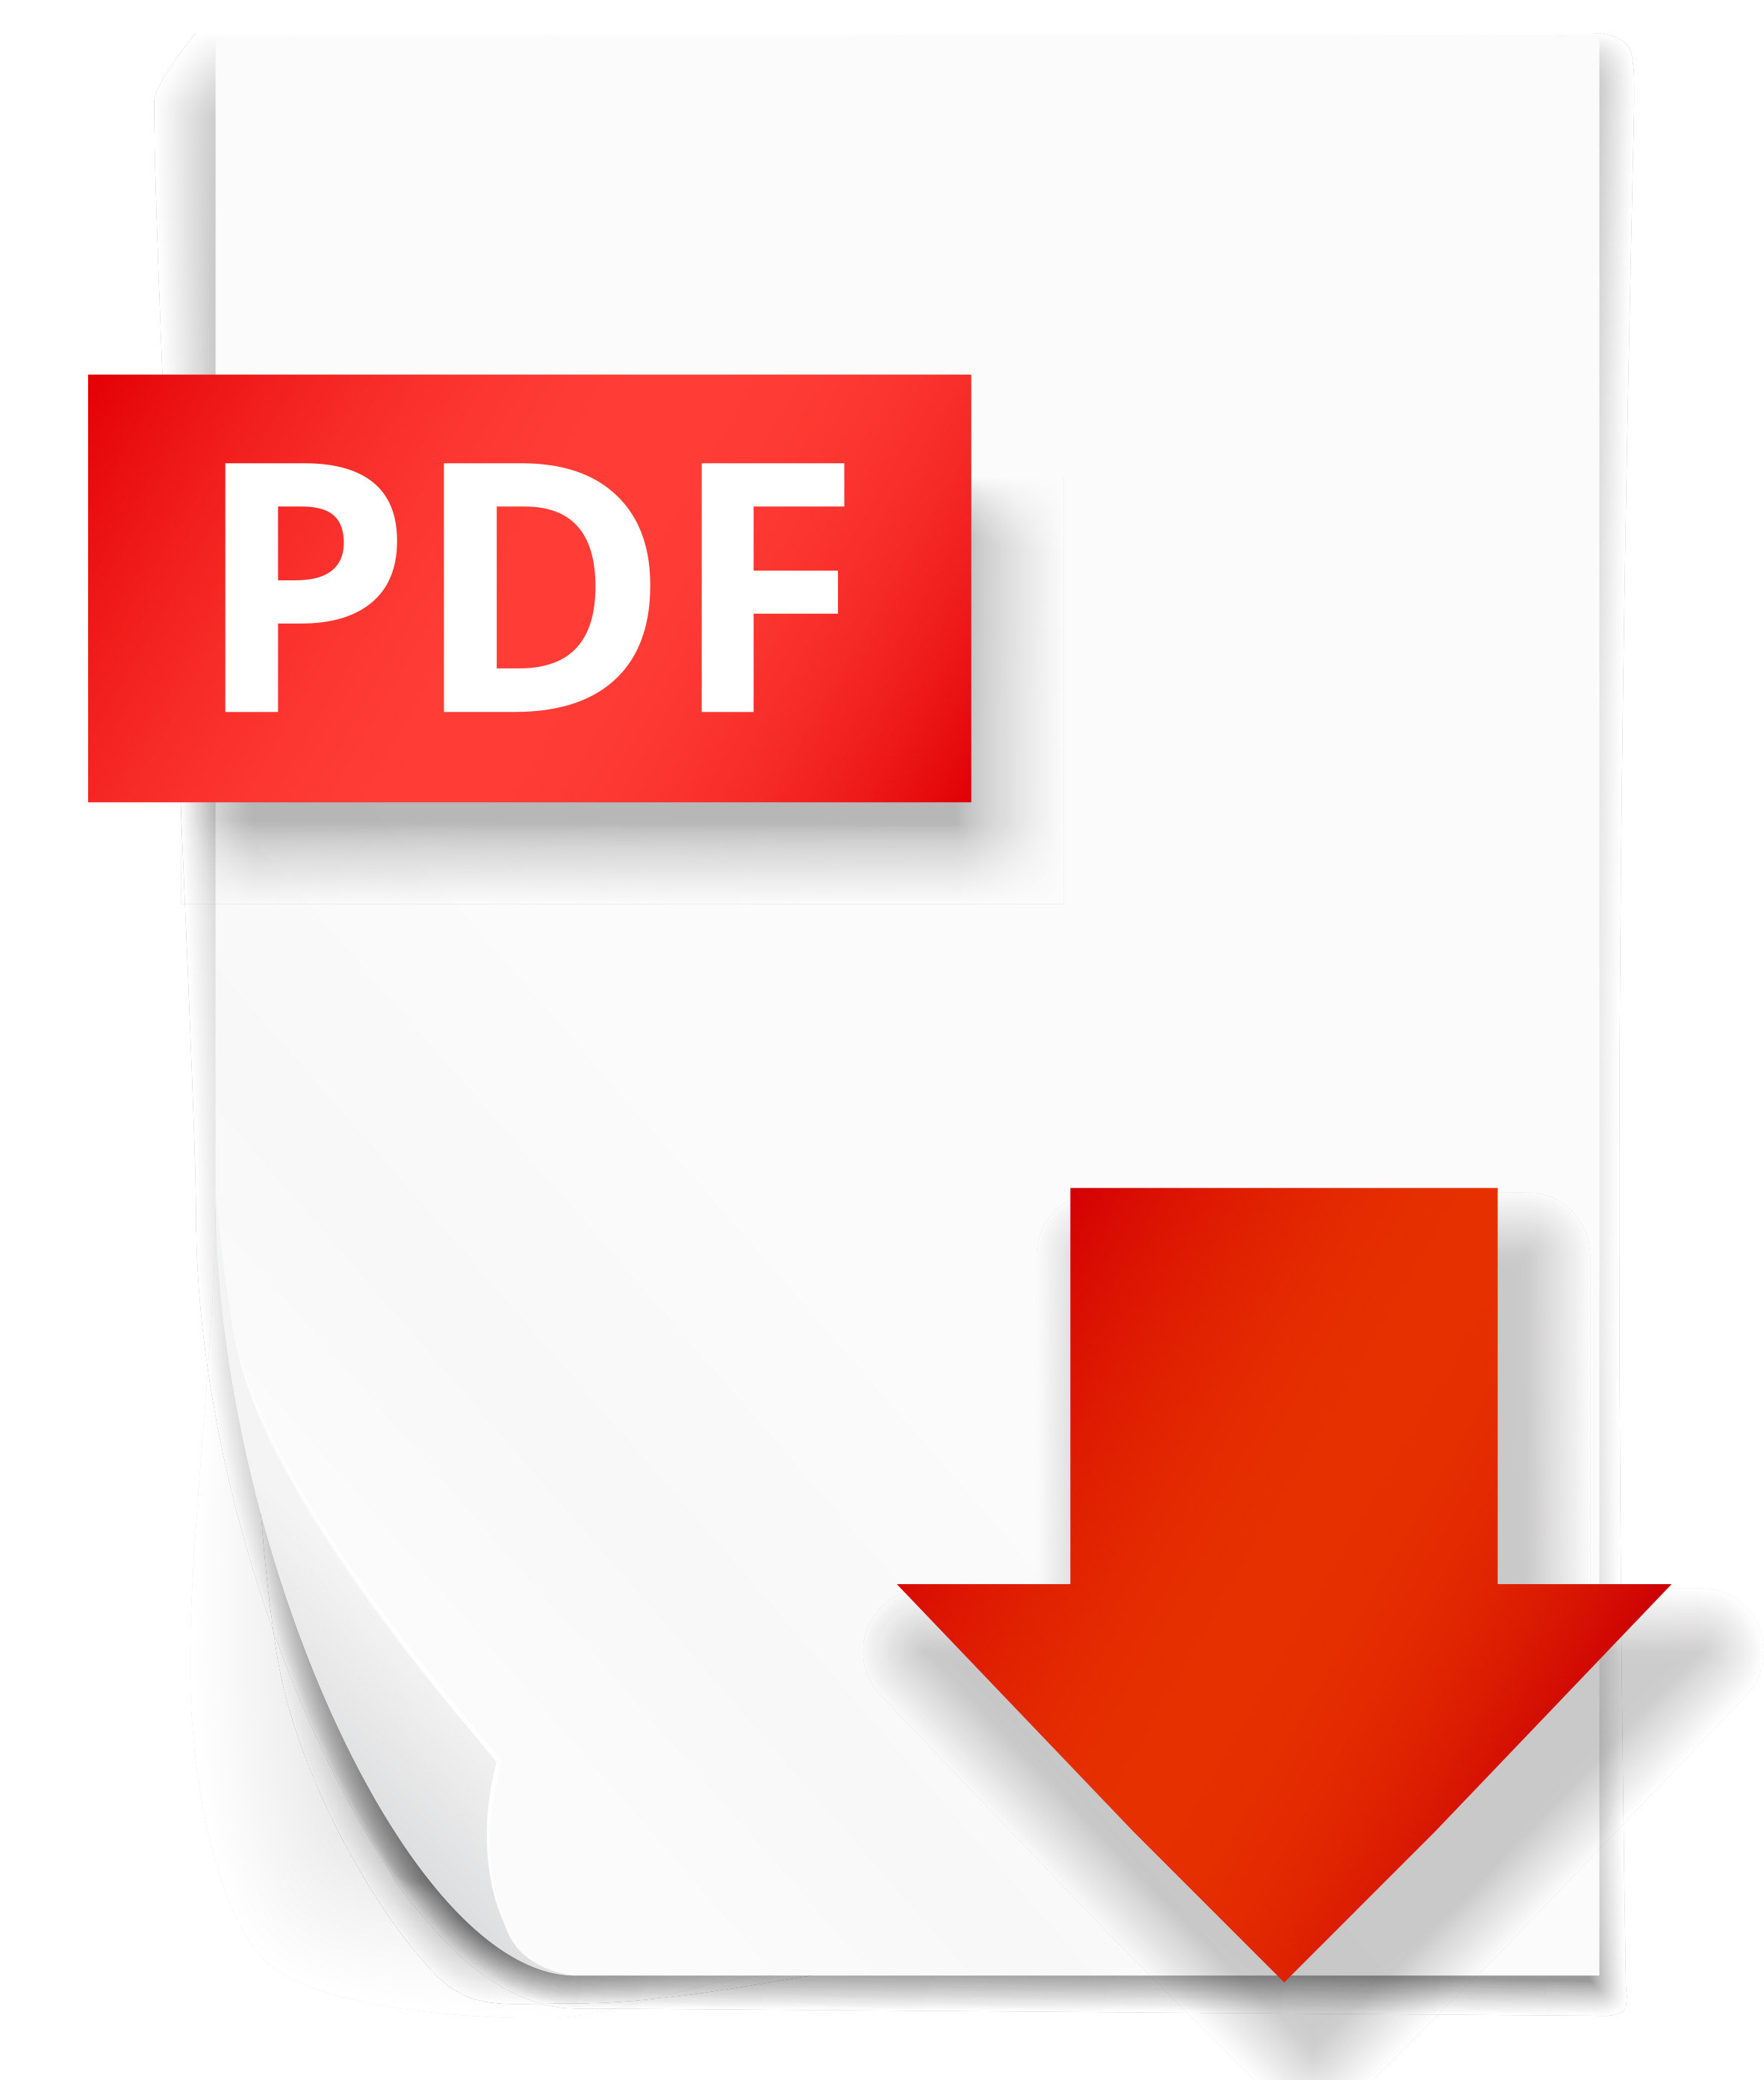 PDF下载图标